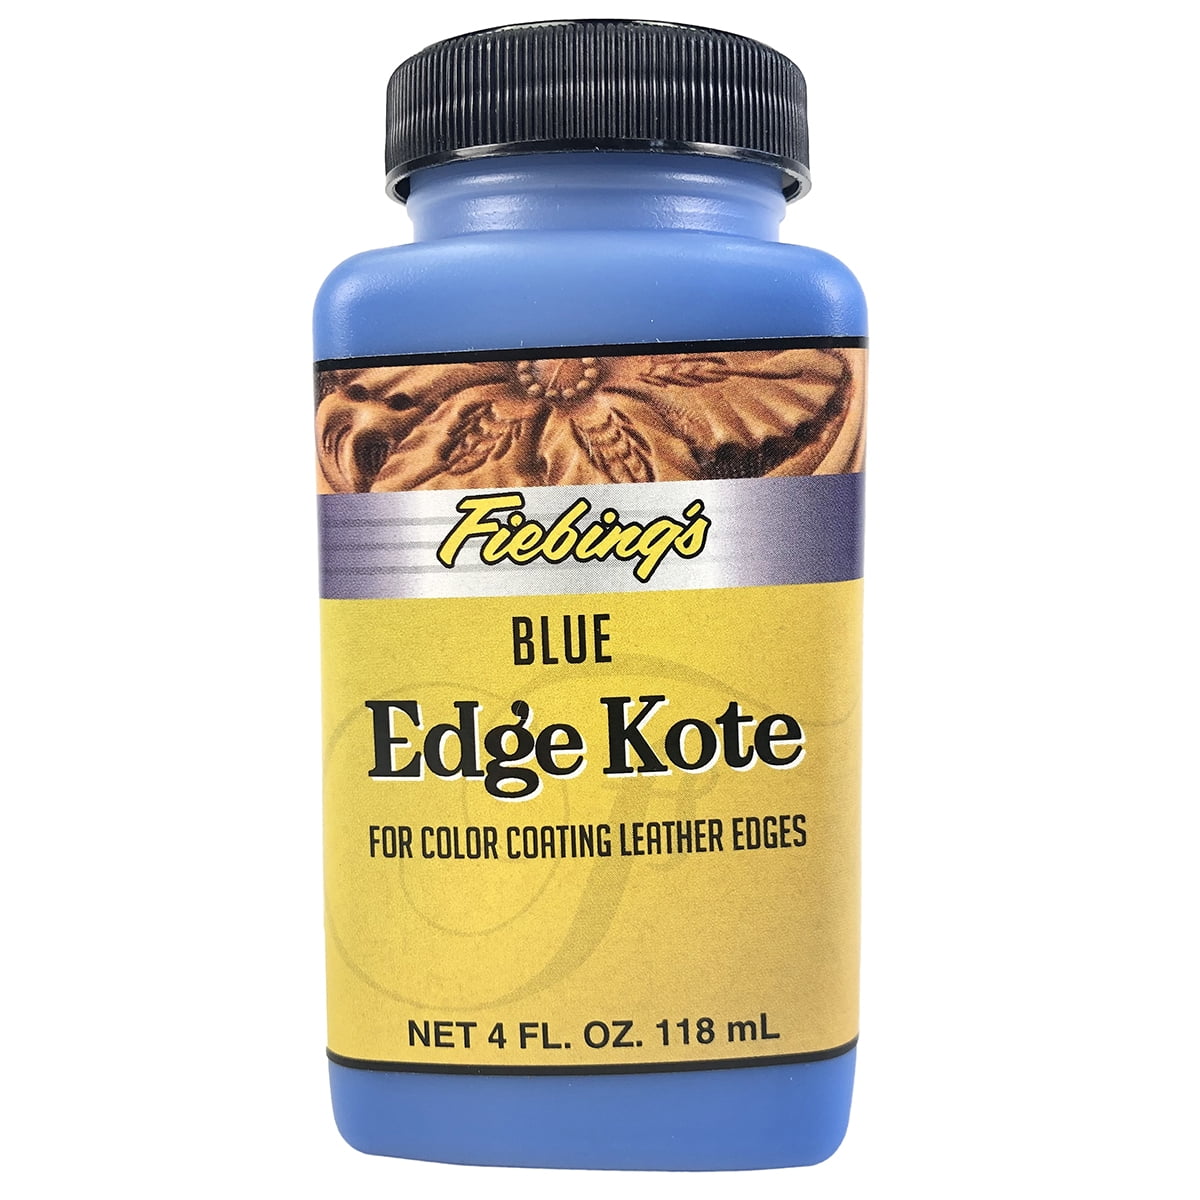 Edge Kote, Edge Paint - How Do I Do That? 